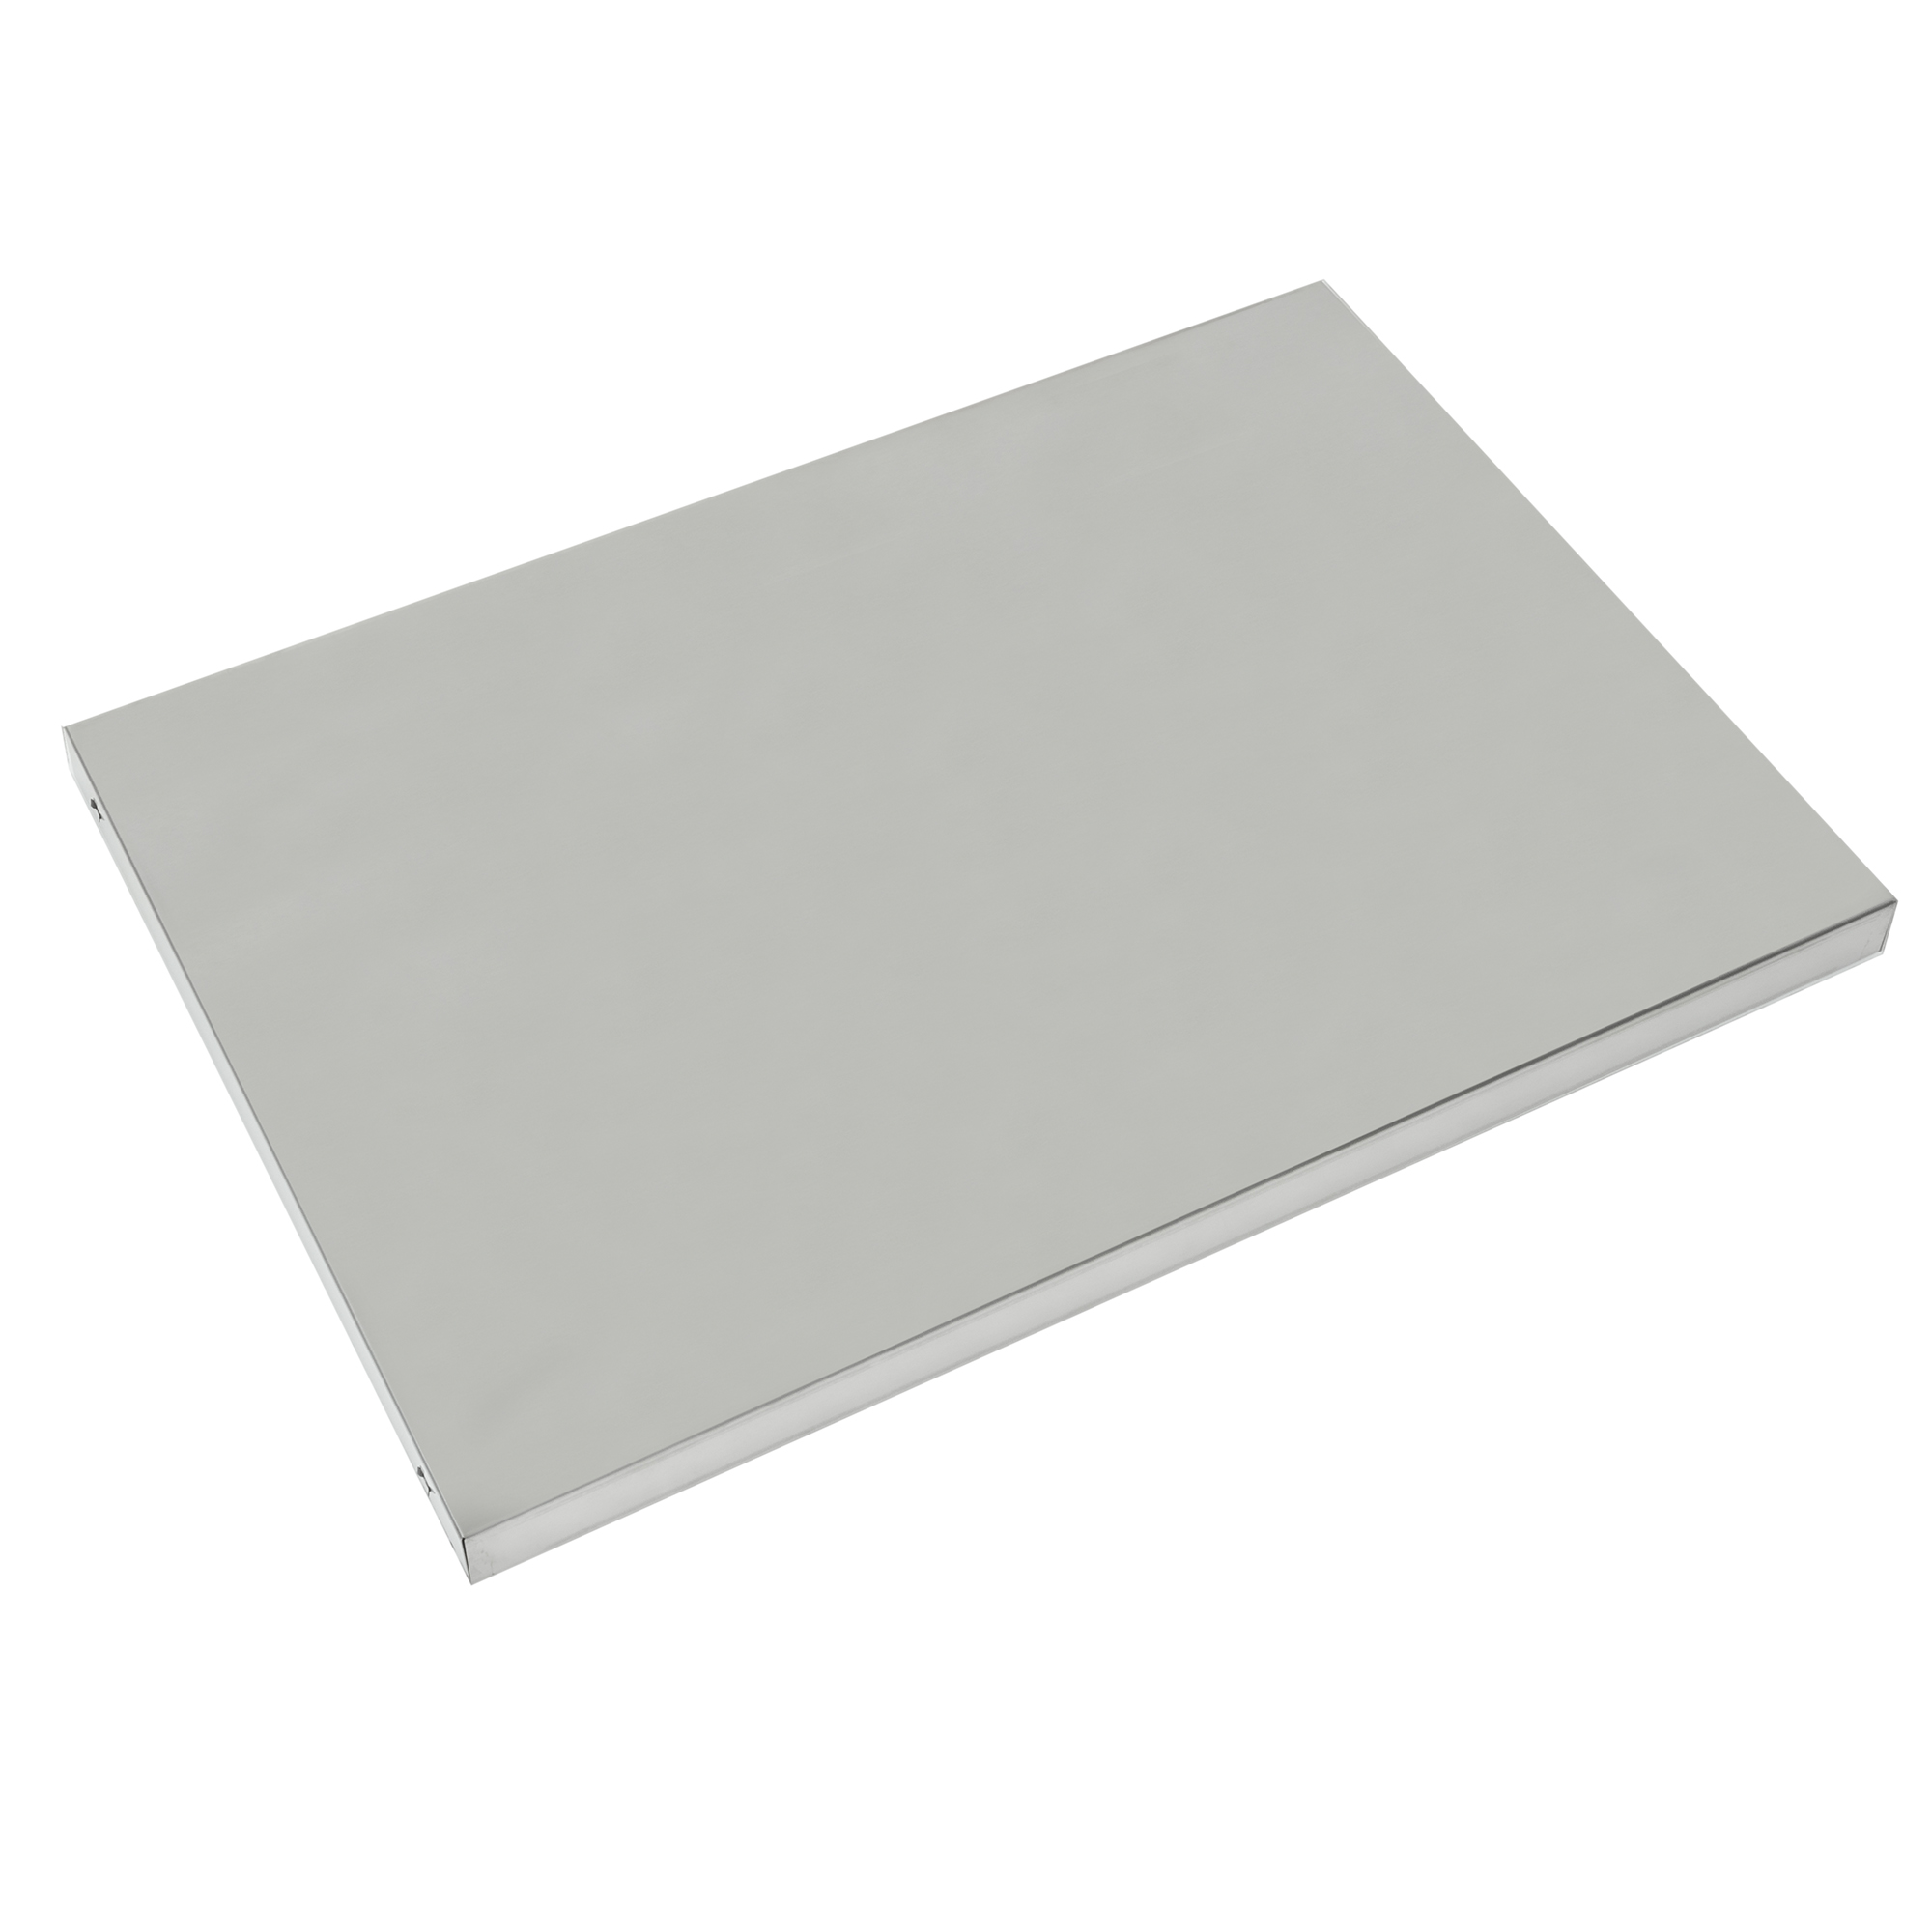 Shelf Videro G4-SL stainless steel